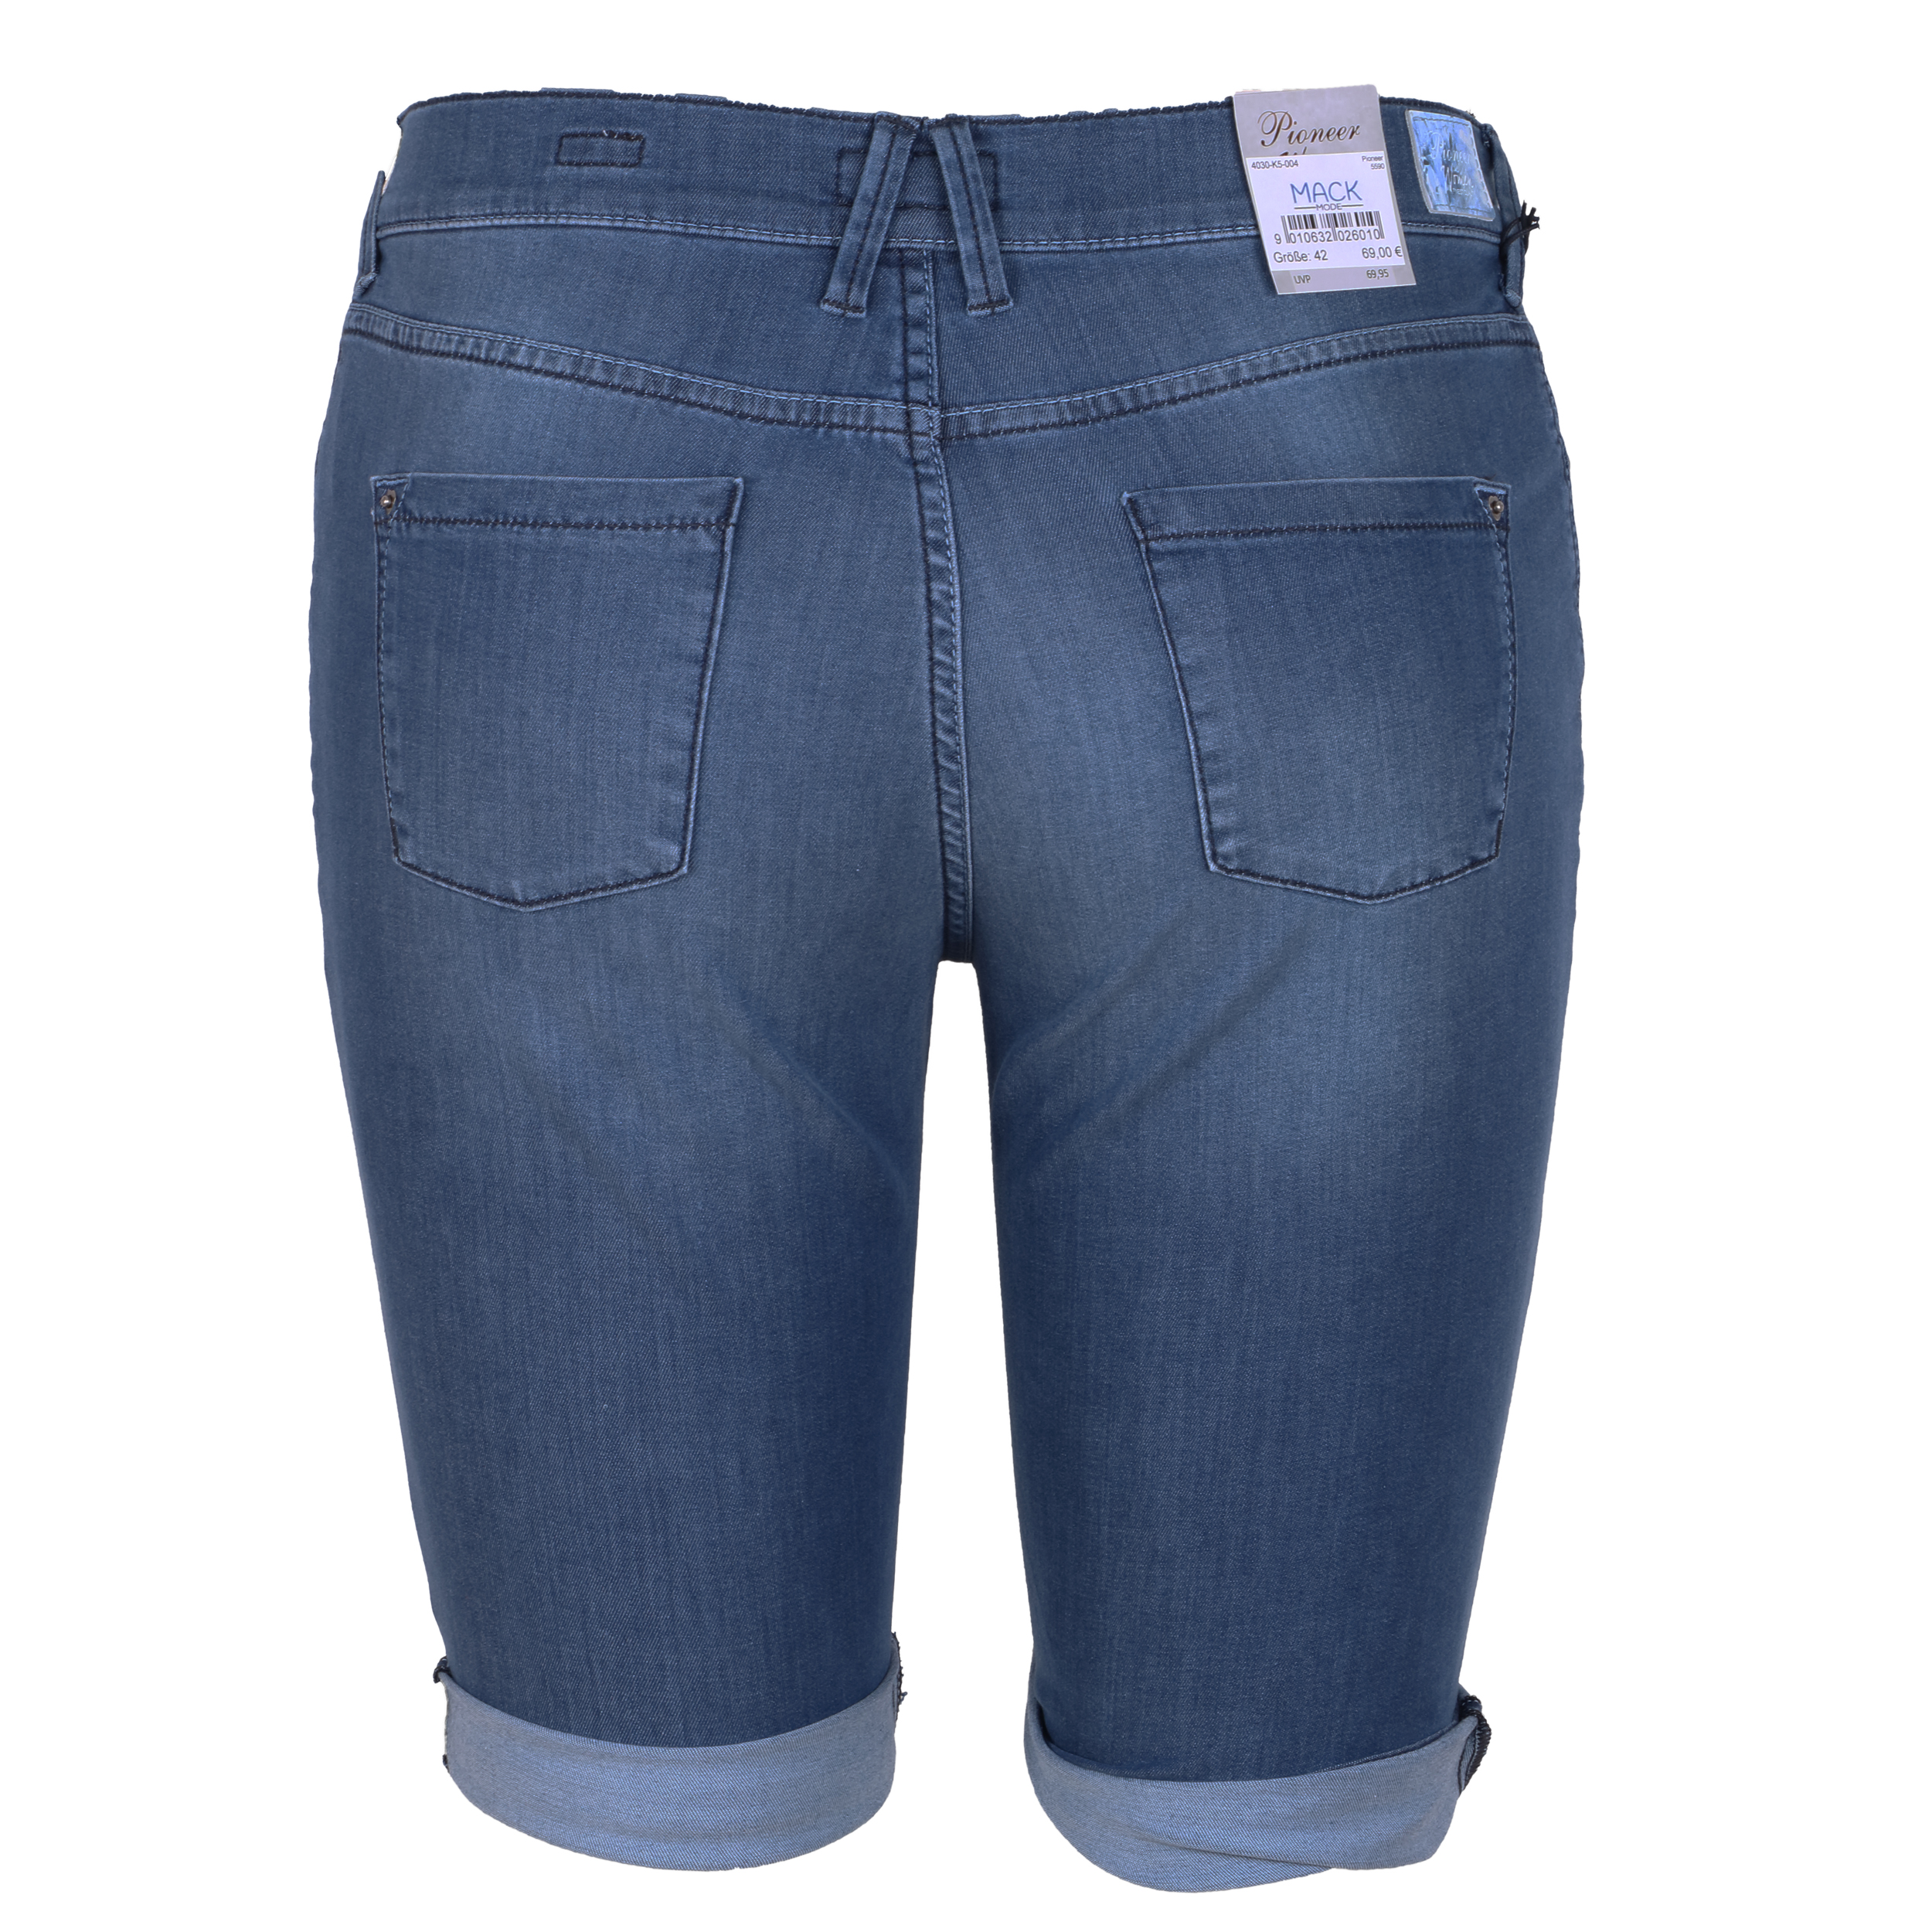 Pioneer Damen Bermuda Jeans-Shorts - blau 42